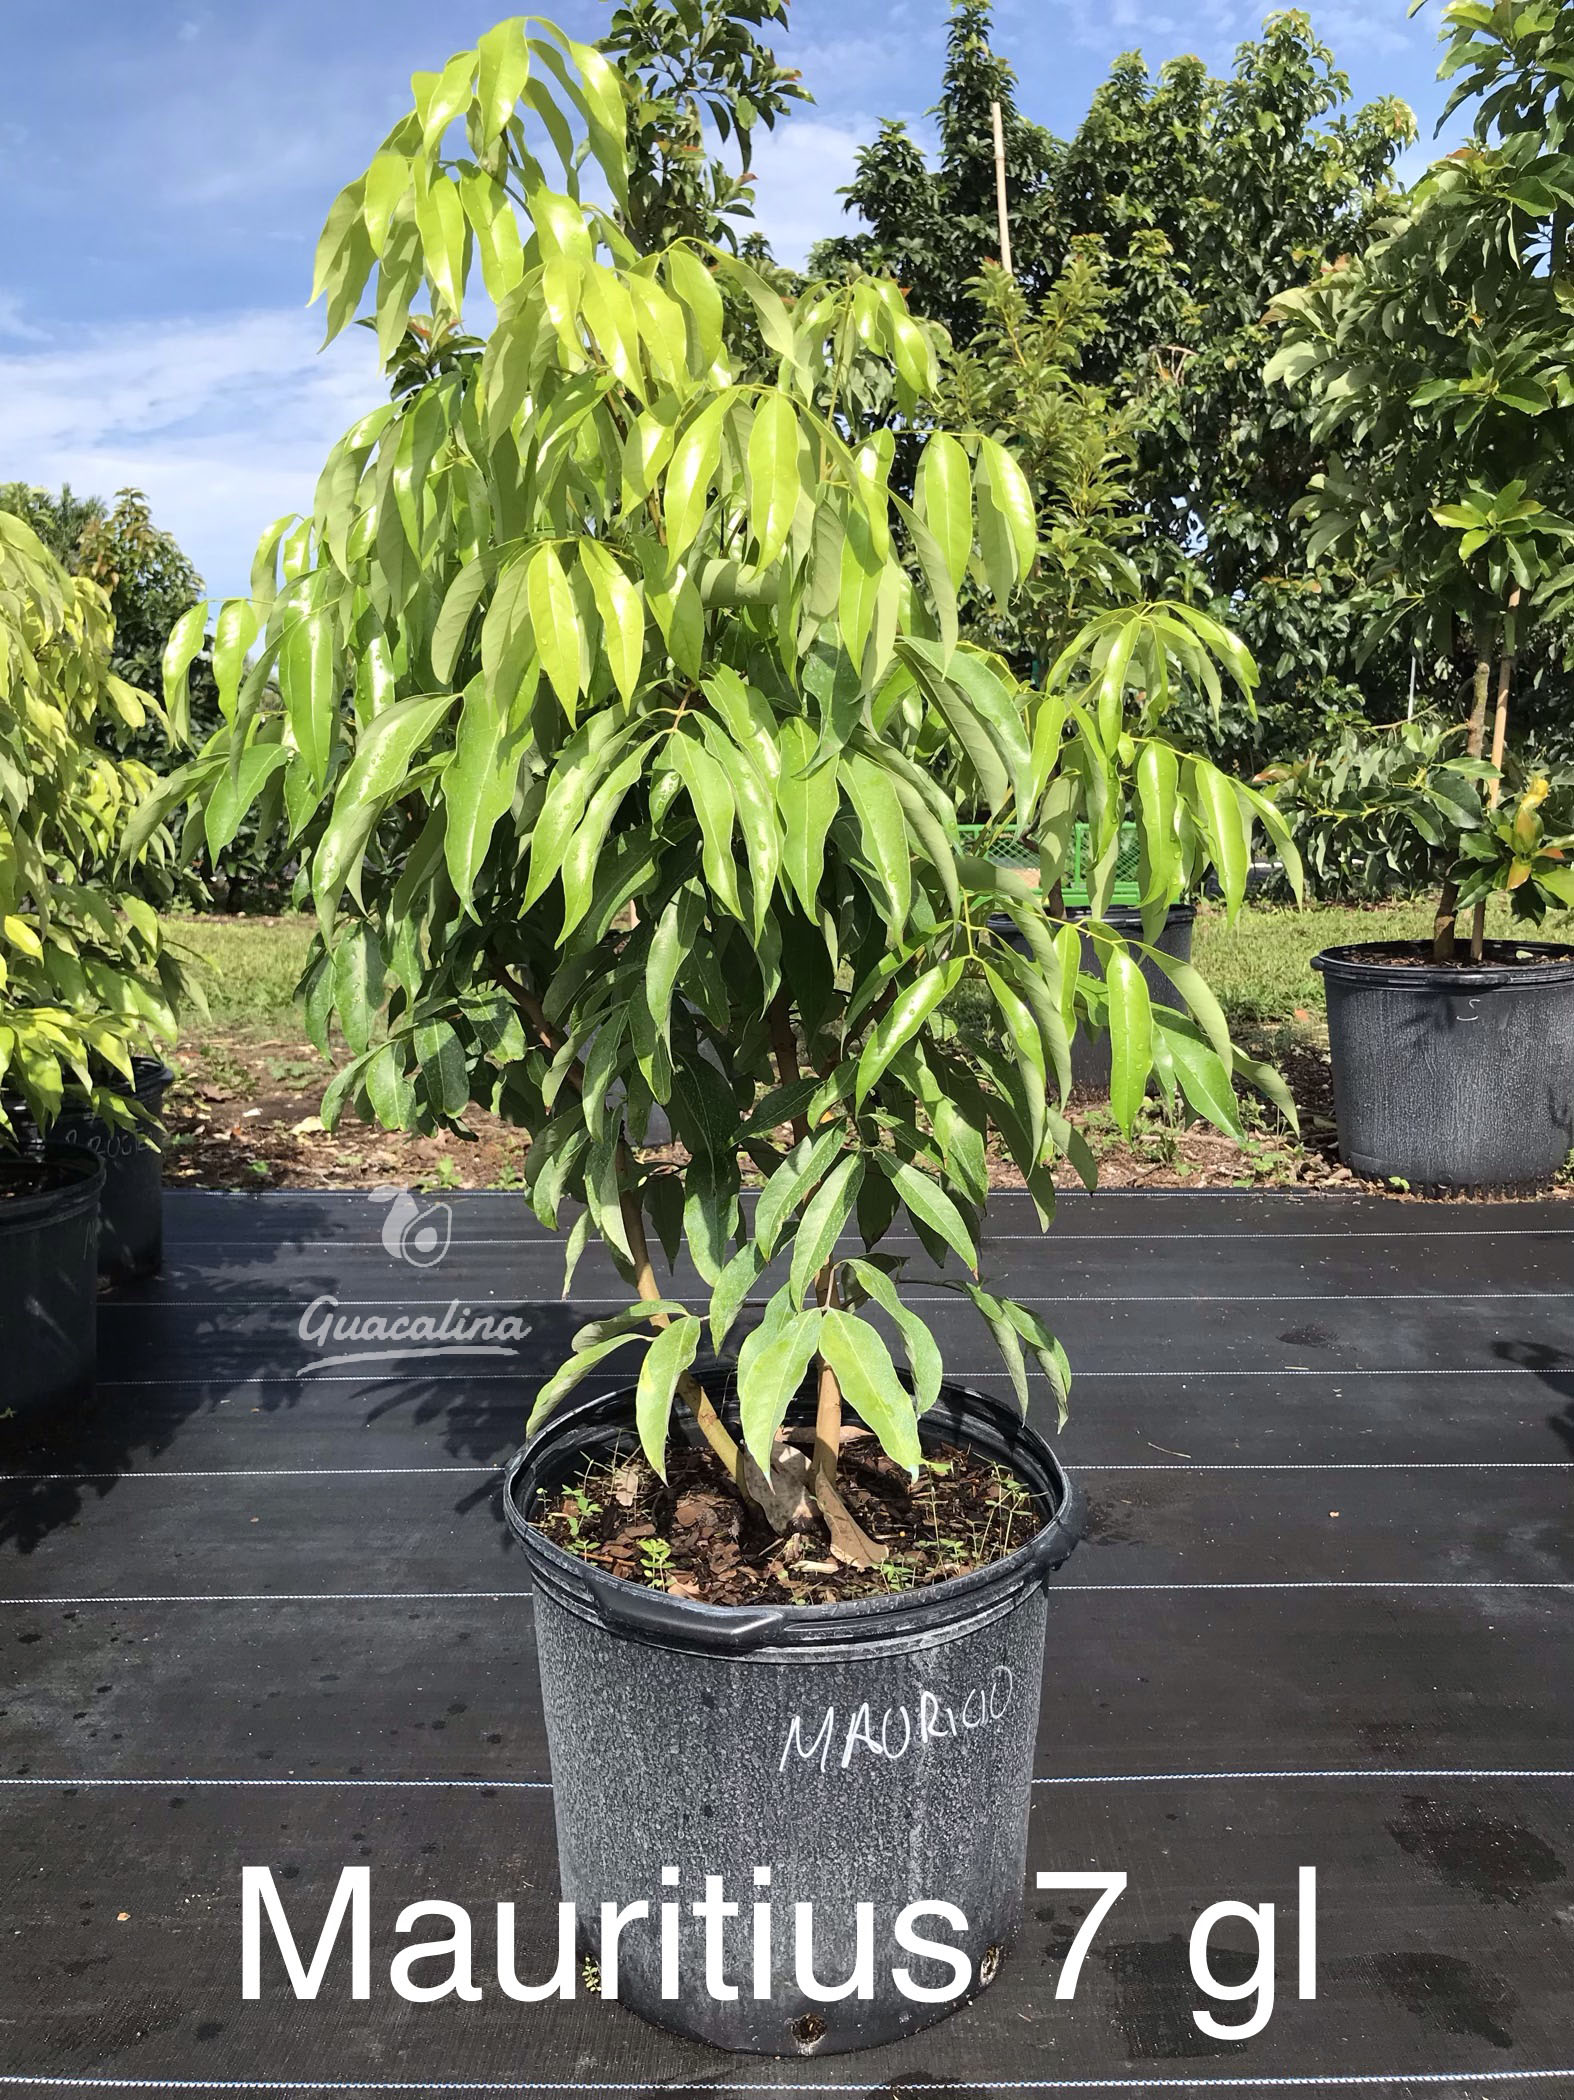 Mauritius Lychee Trees Guacalina Nursery & Broker